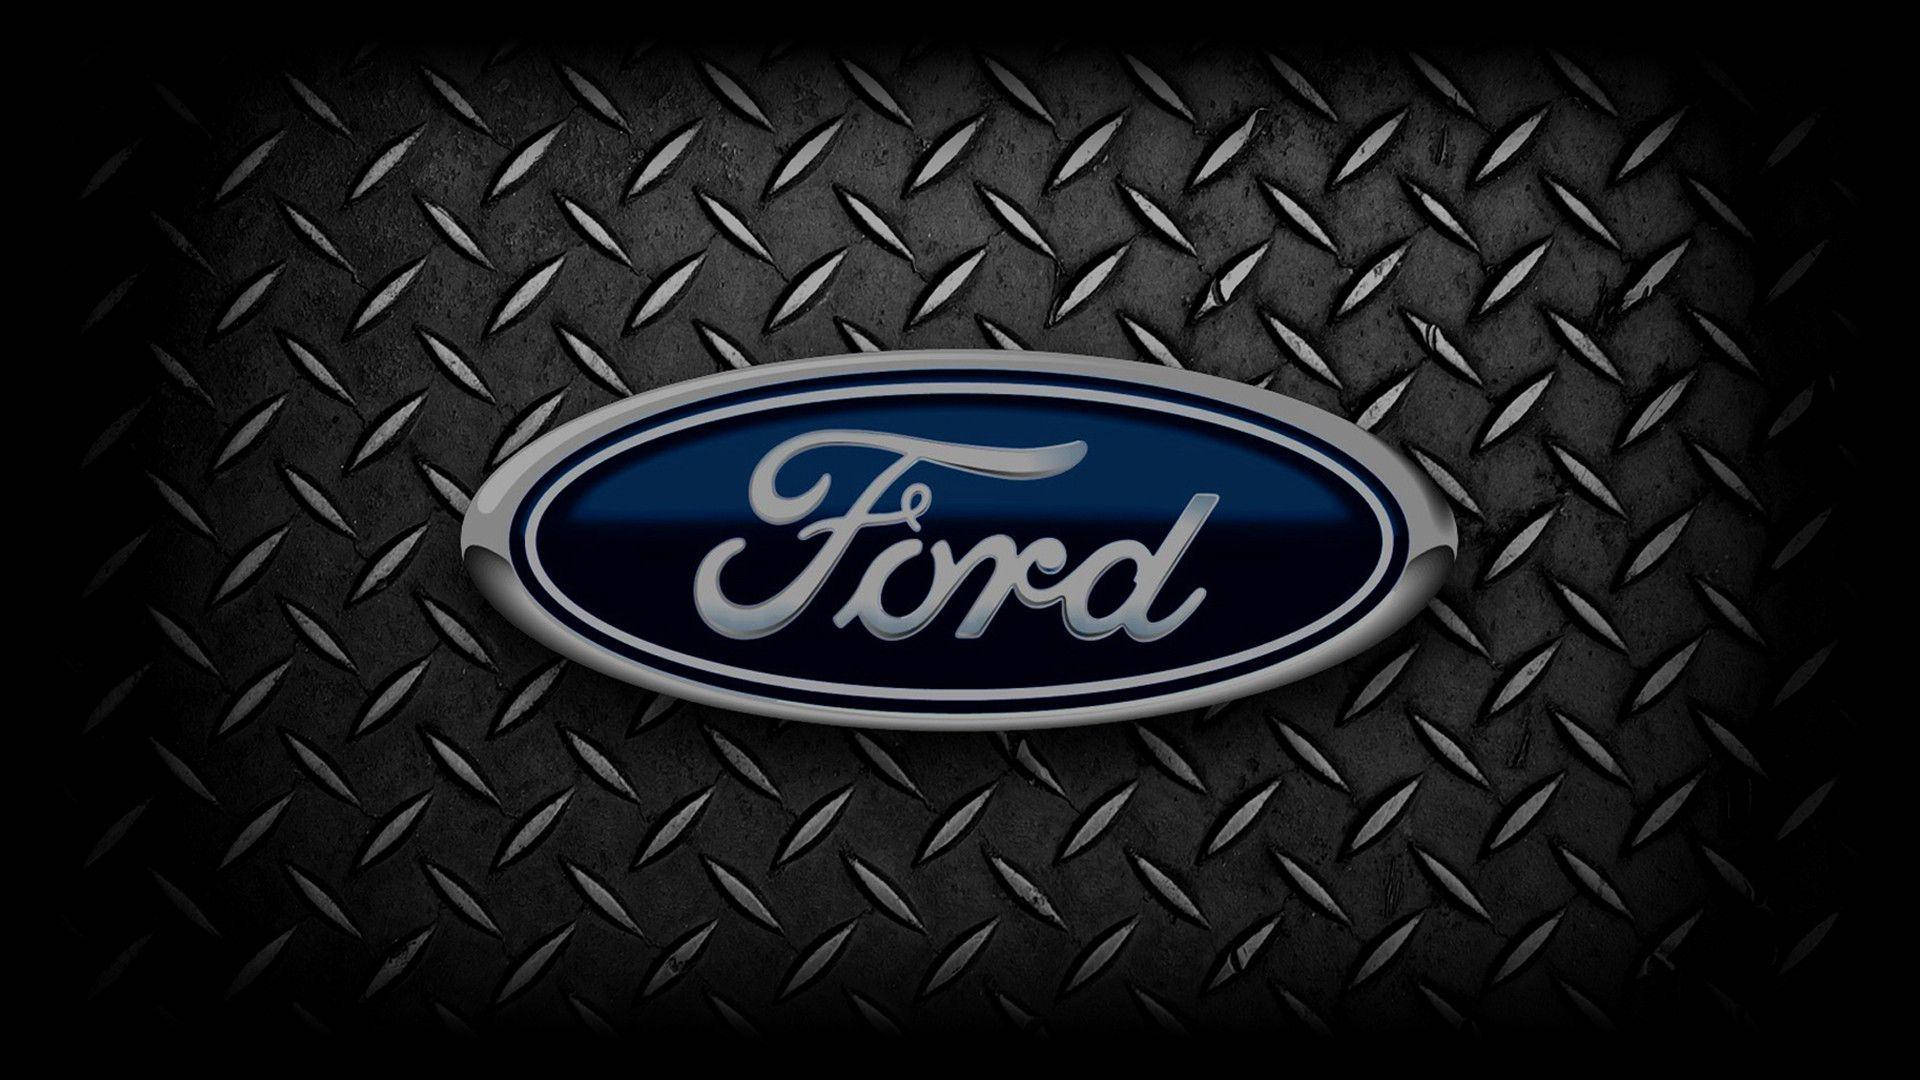 Ford Cool Logos Wallpaper